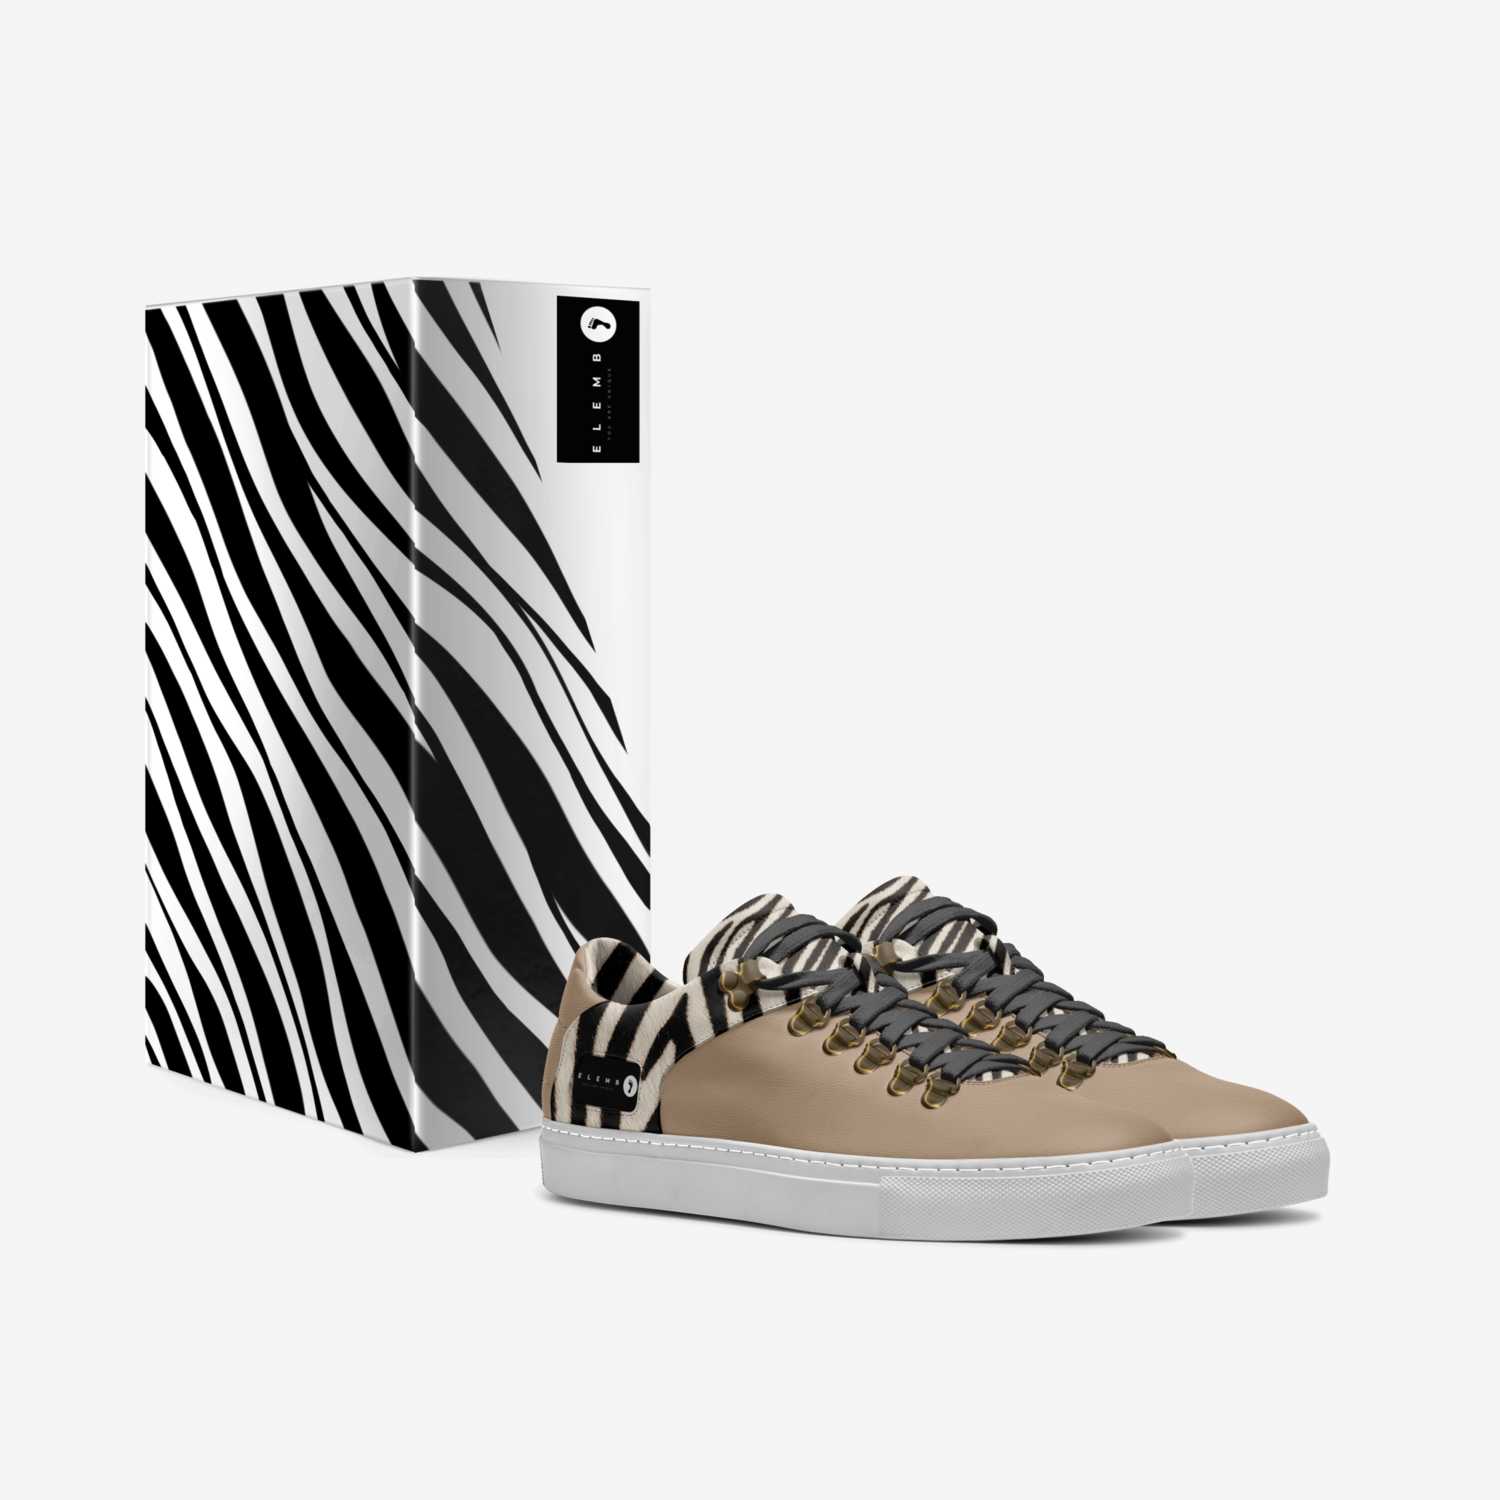 ELEMBO custom made in Italy shoes by Franck Katshunga | Box view